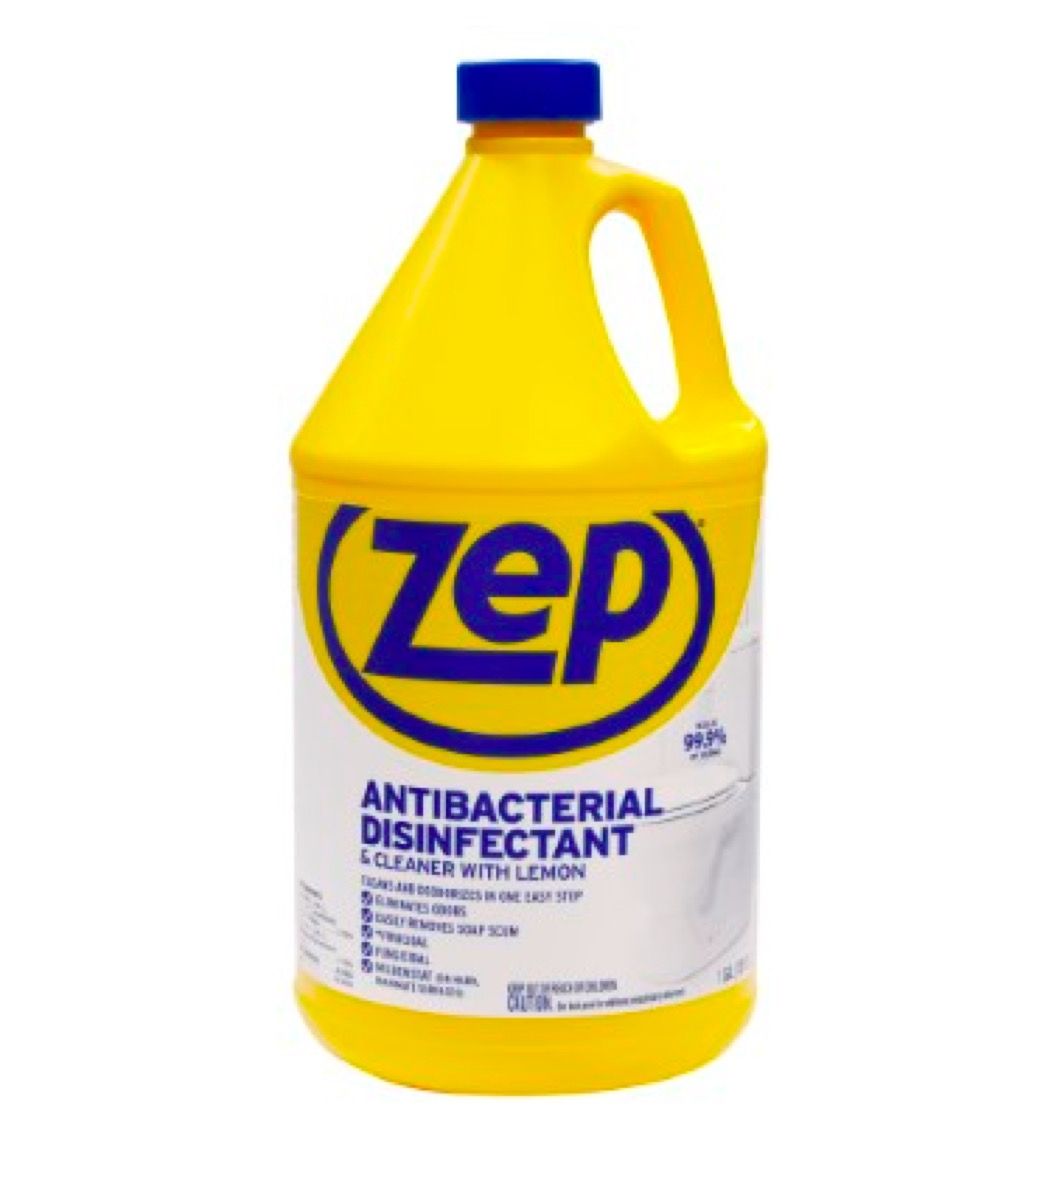 Zep Antibacterial Disimpektante at Mas Malinis na may Lemon